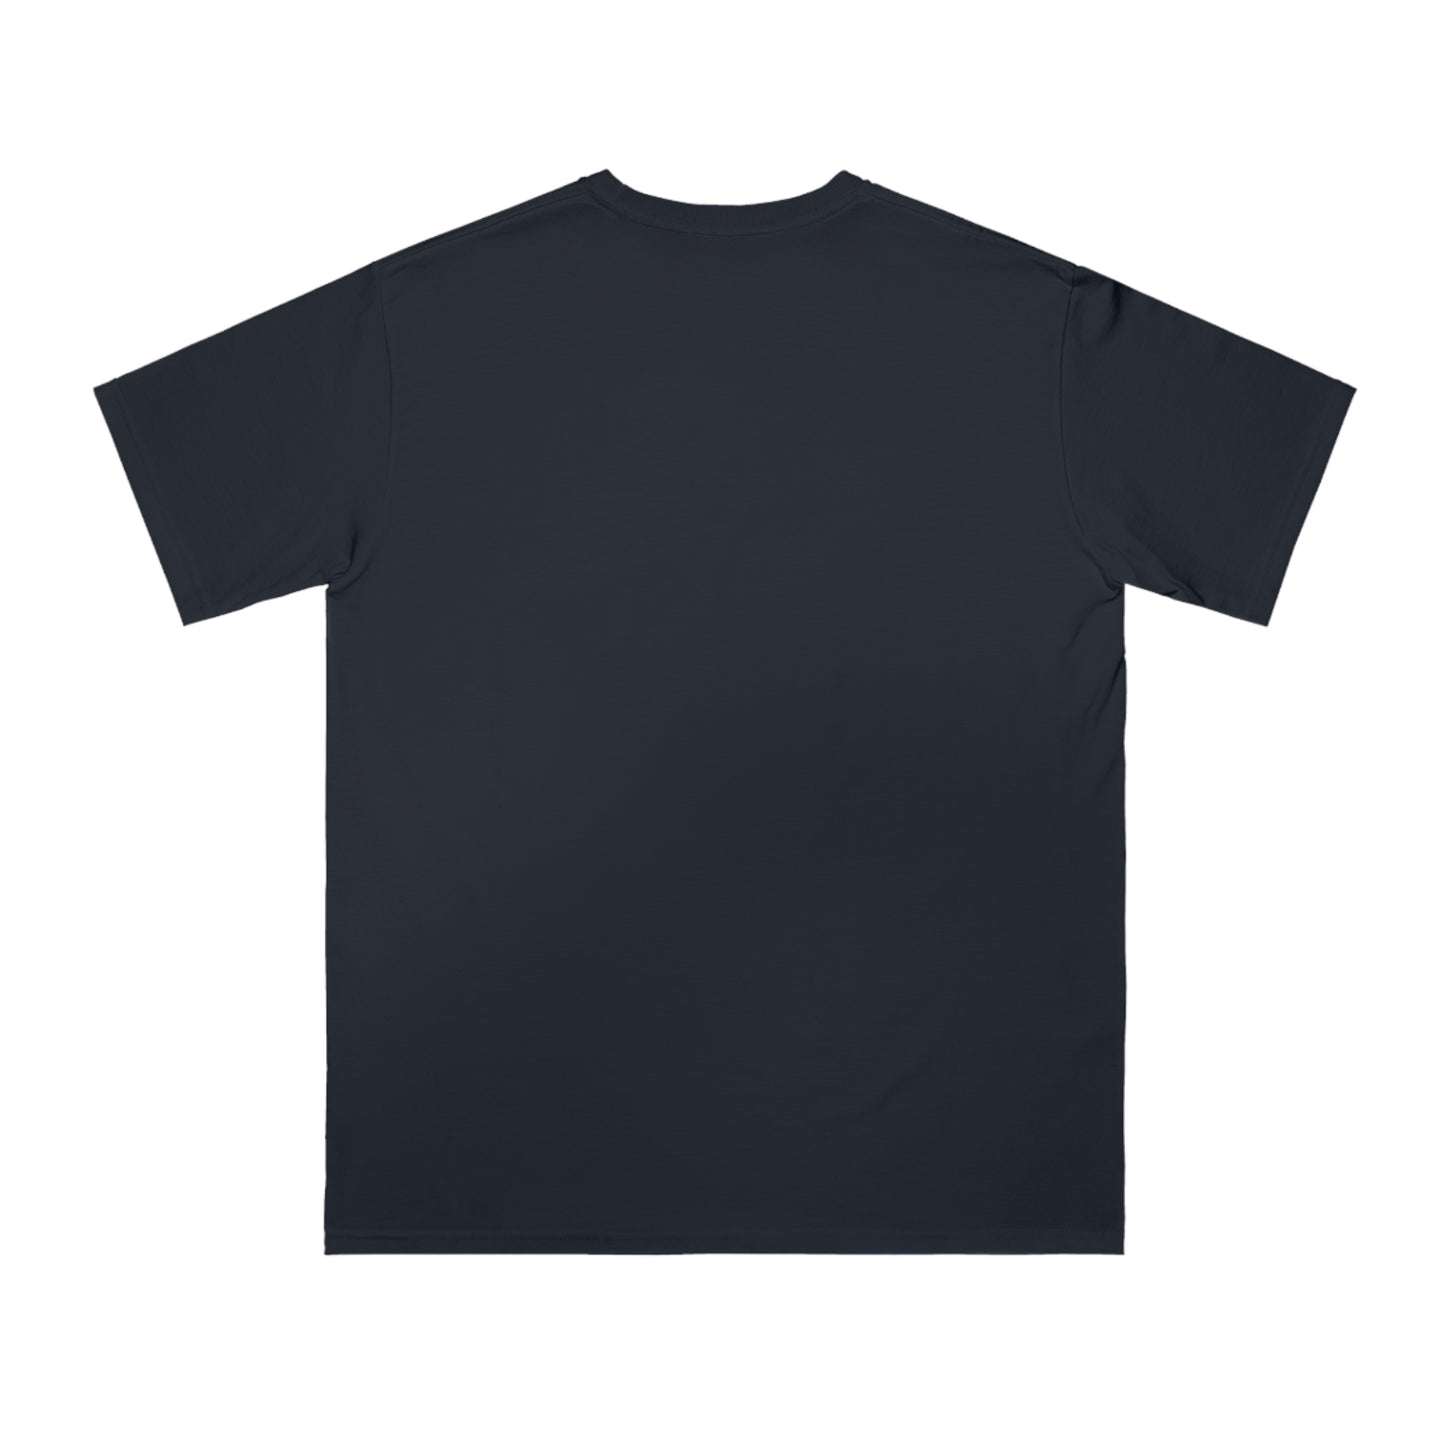 Detroit '313' T-Shirt (Tag Font) | Unisex Organic